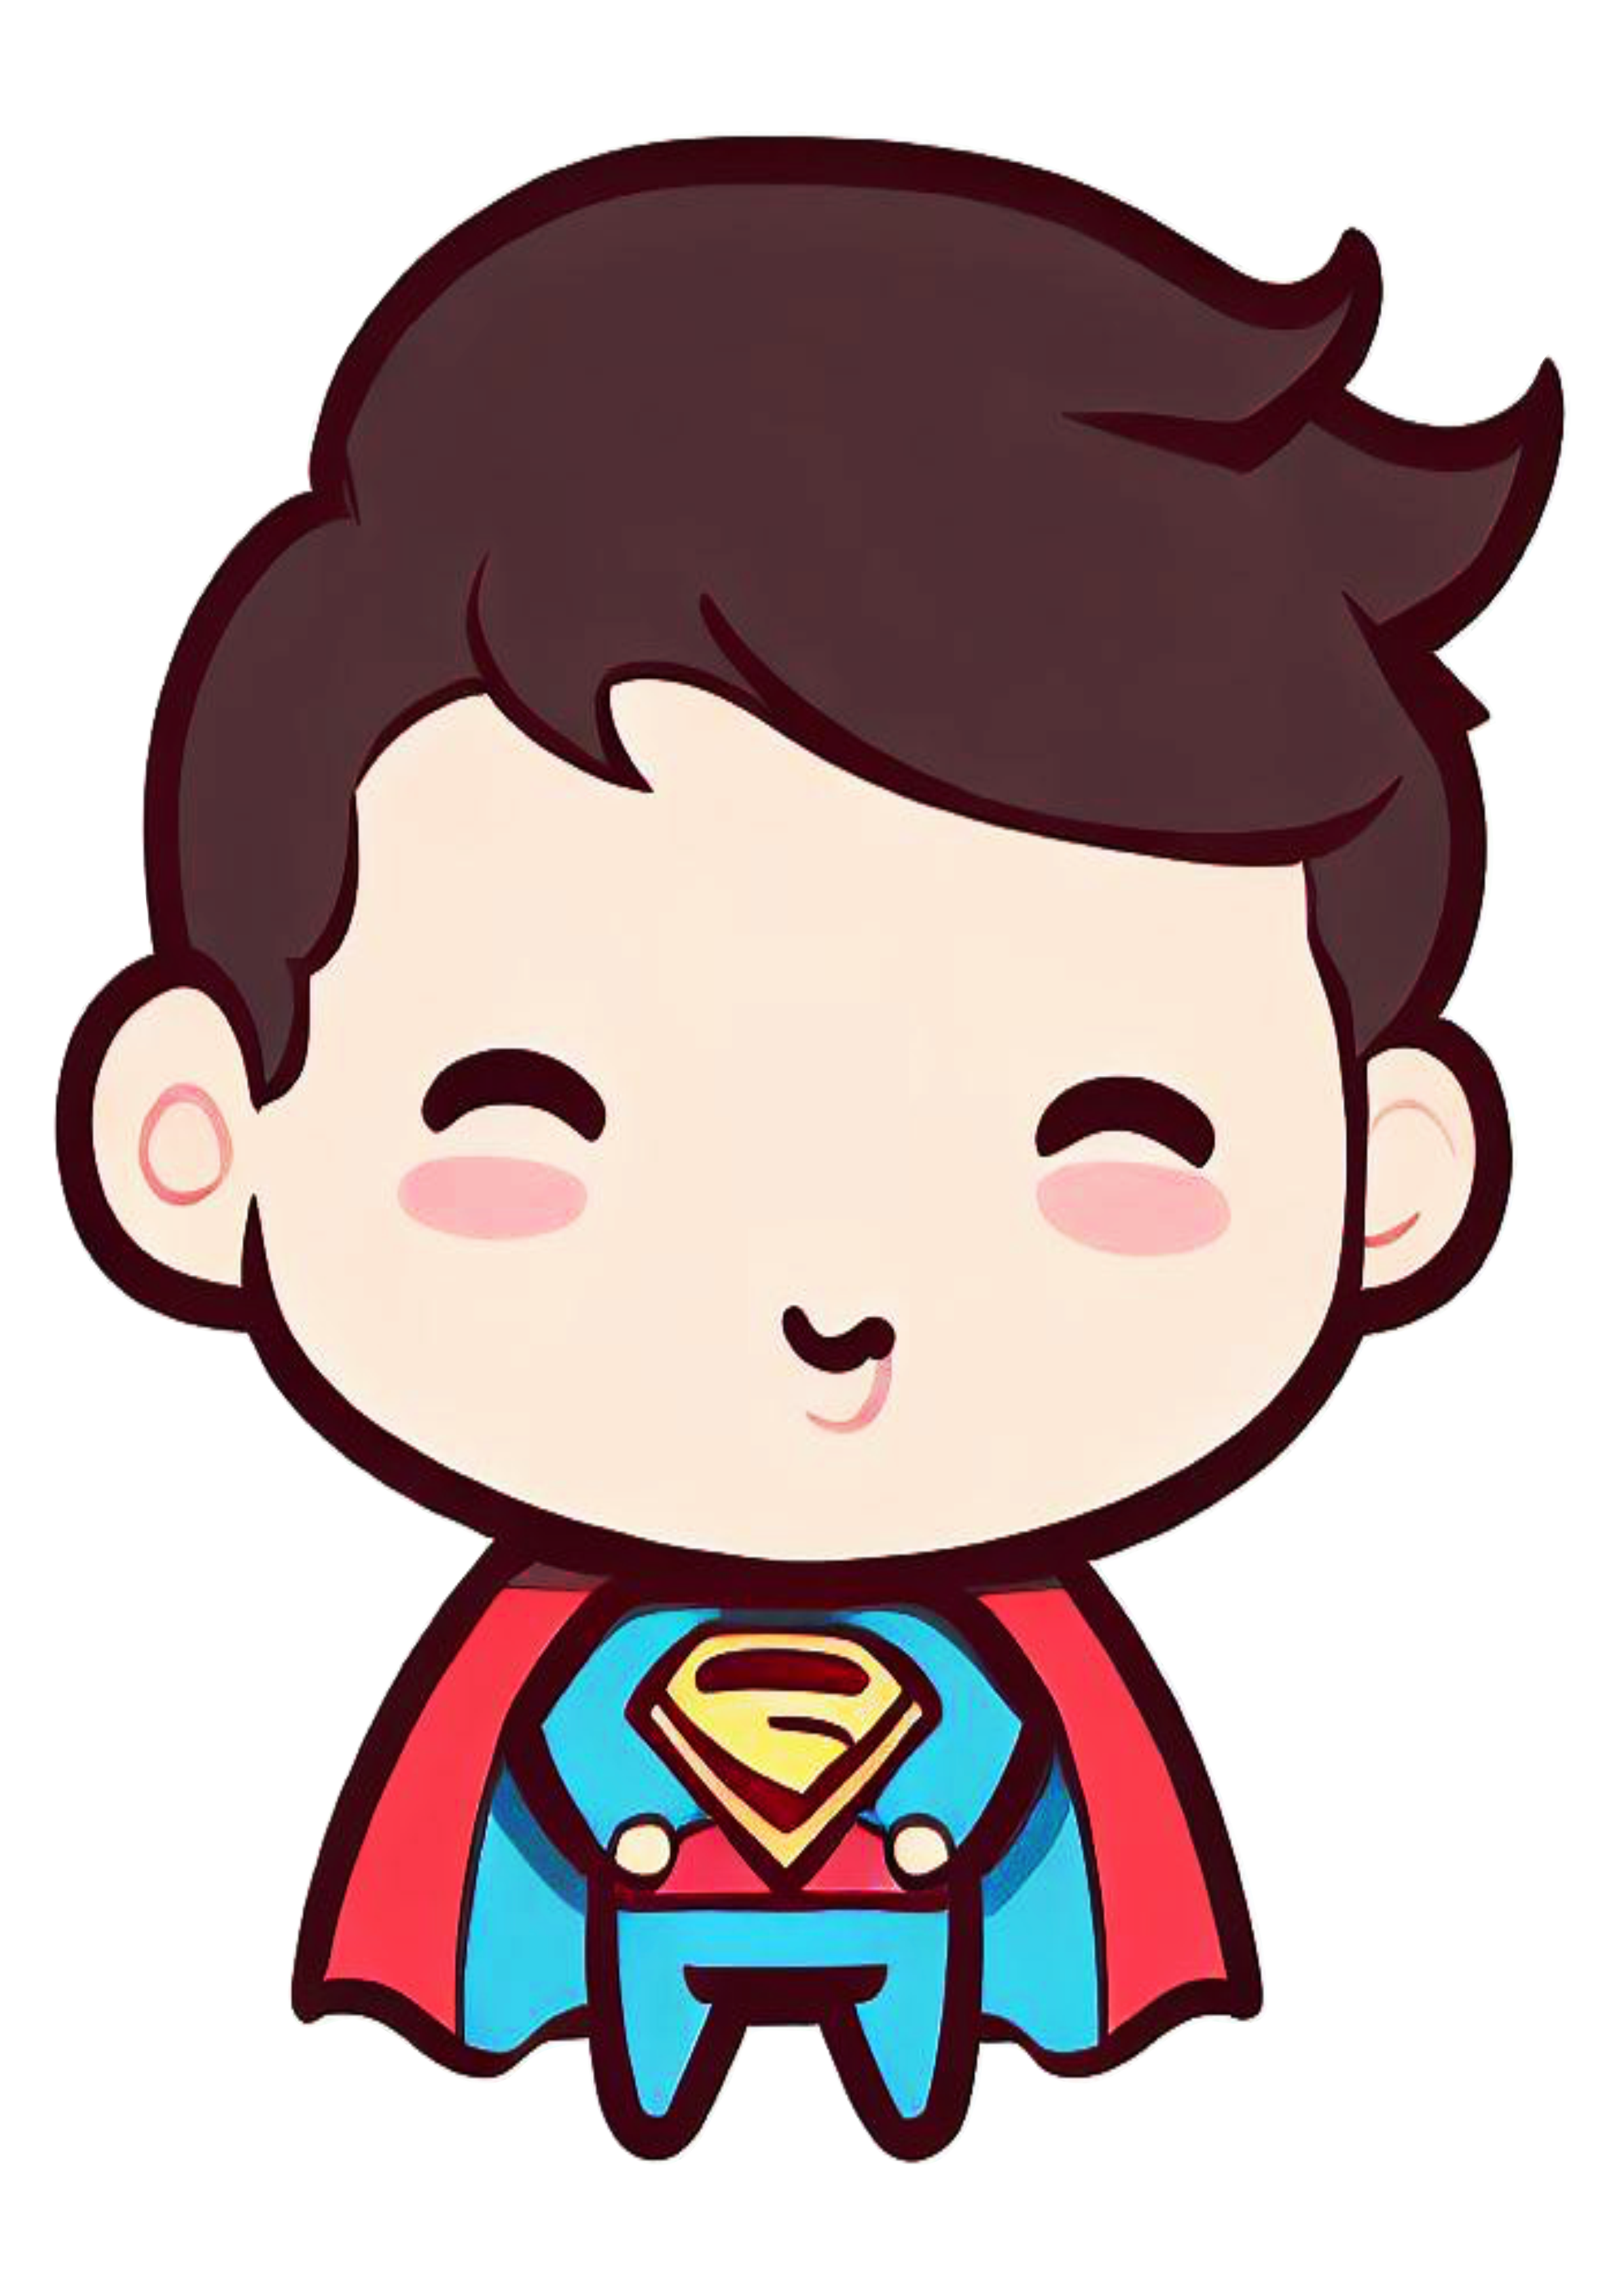 Super homem baby fofinho cute superman heroi fantasia infantil bonitinho png